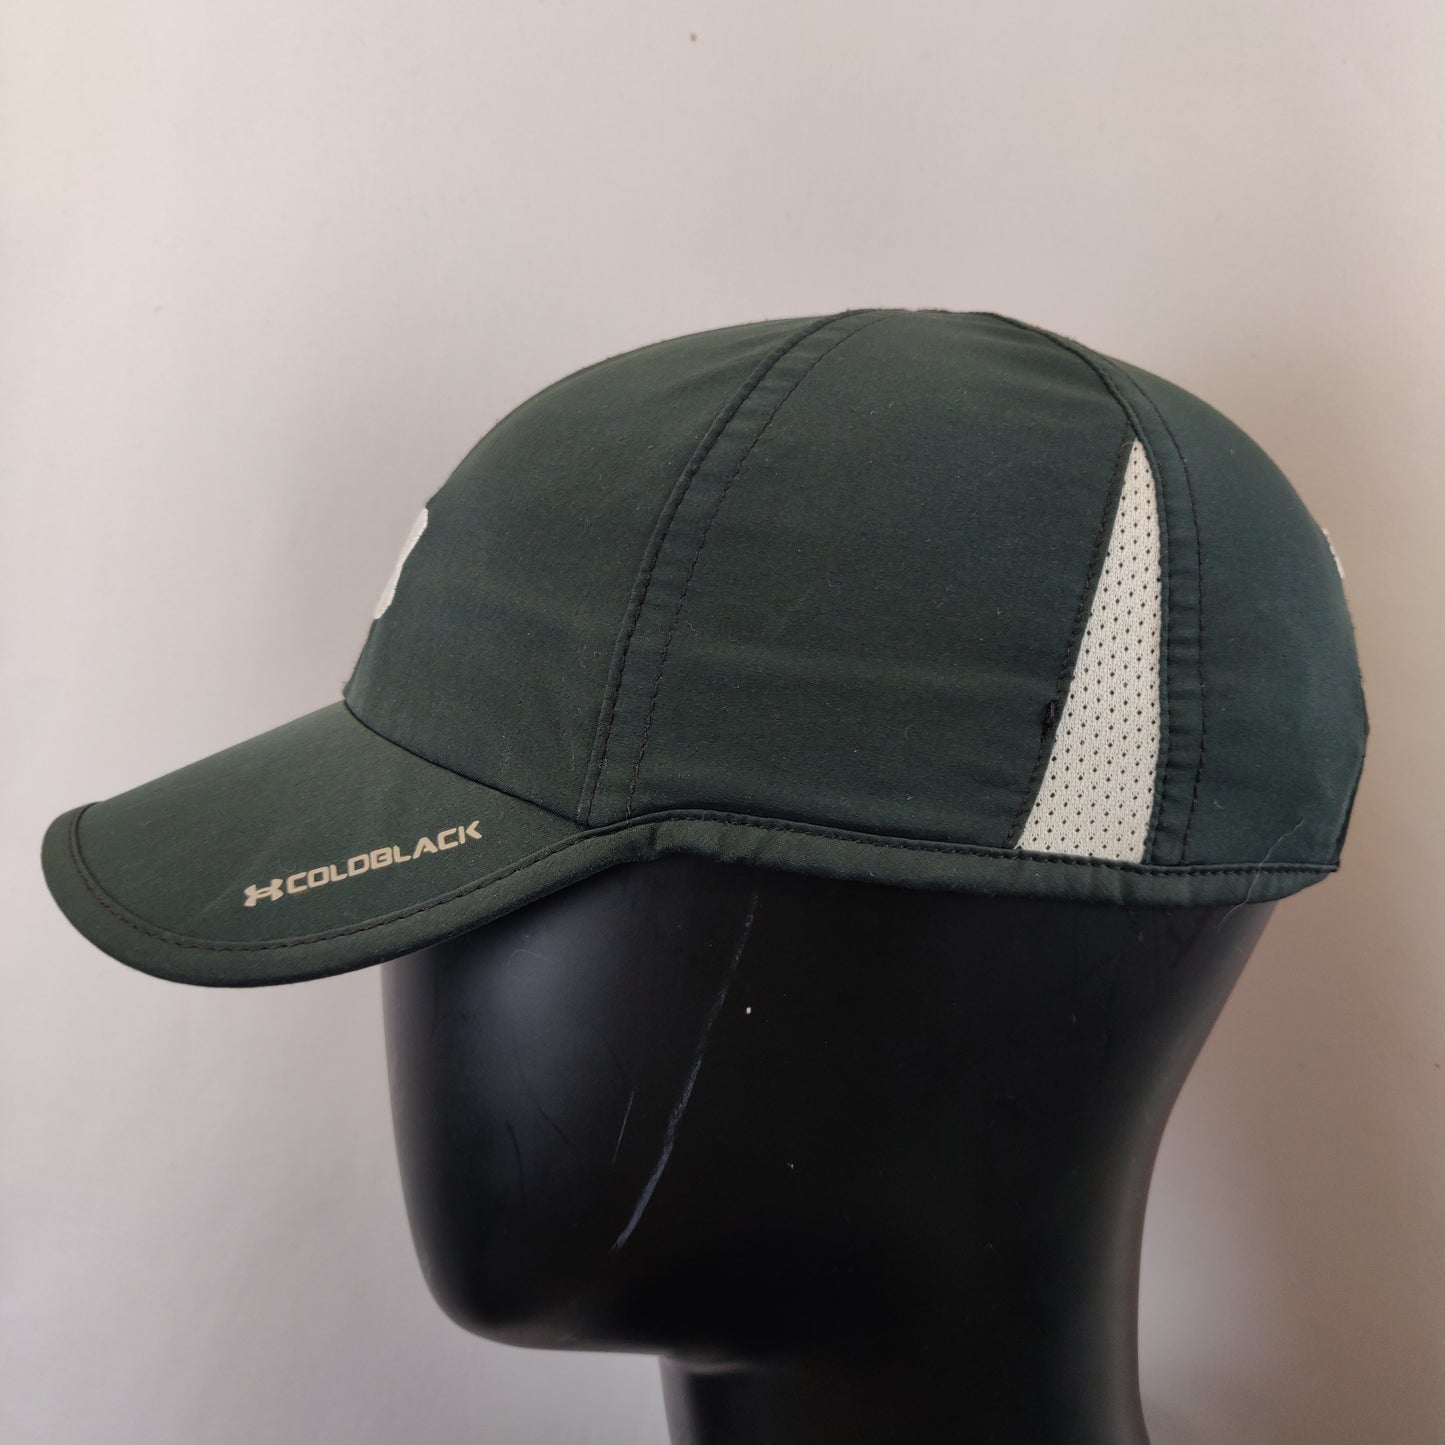 Under Armour Cold Black Green Adjustable Baseball Cap Hat Women OSFA